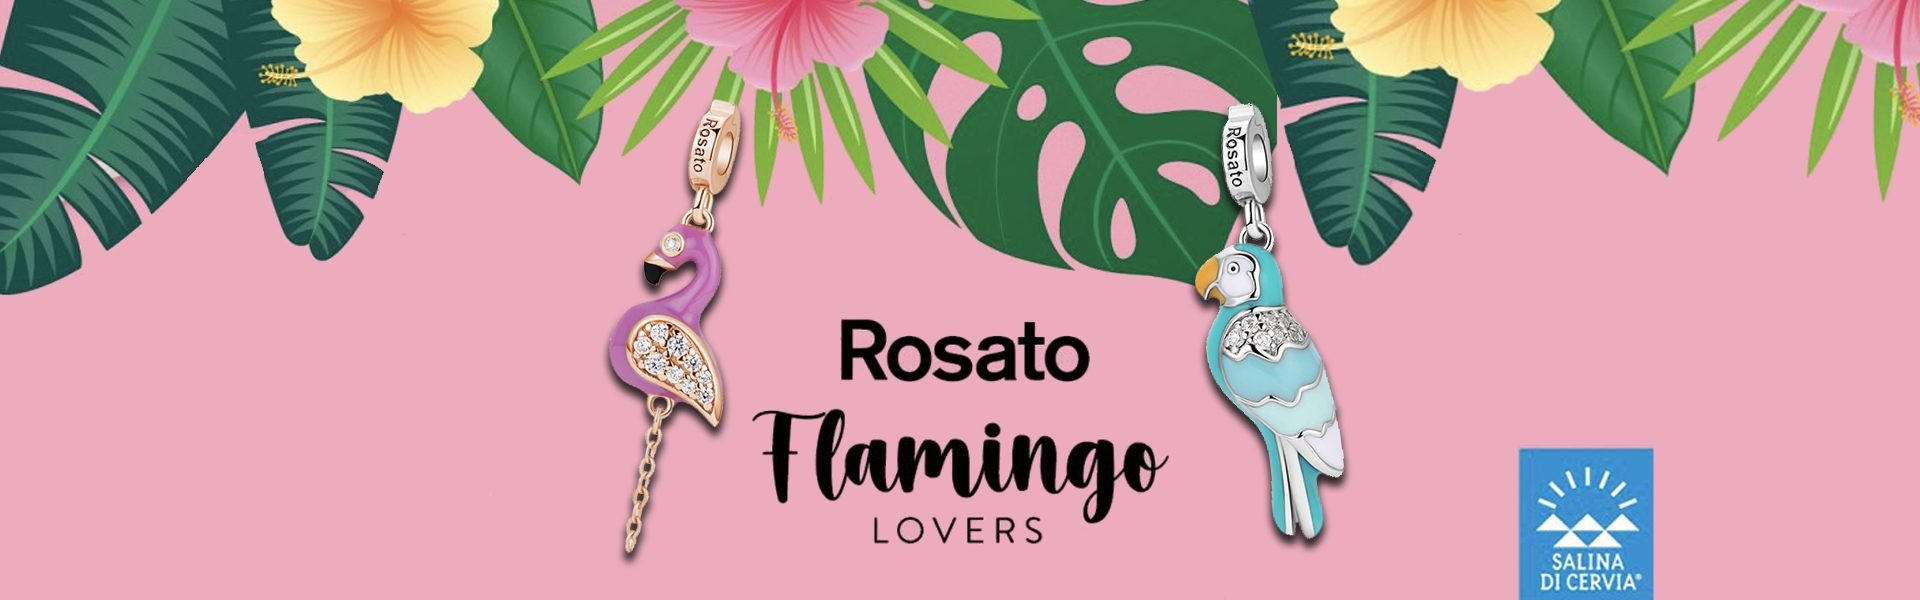 Rosato flamingo lovers